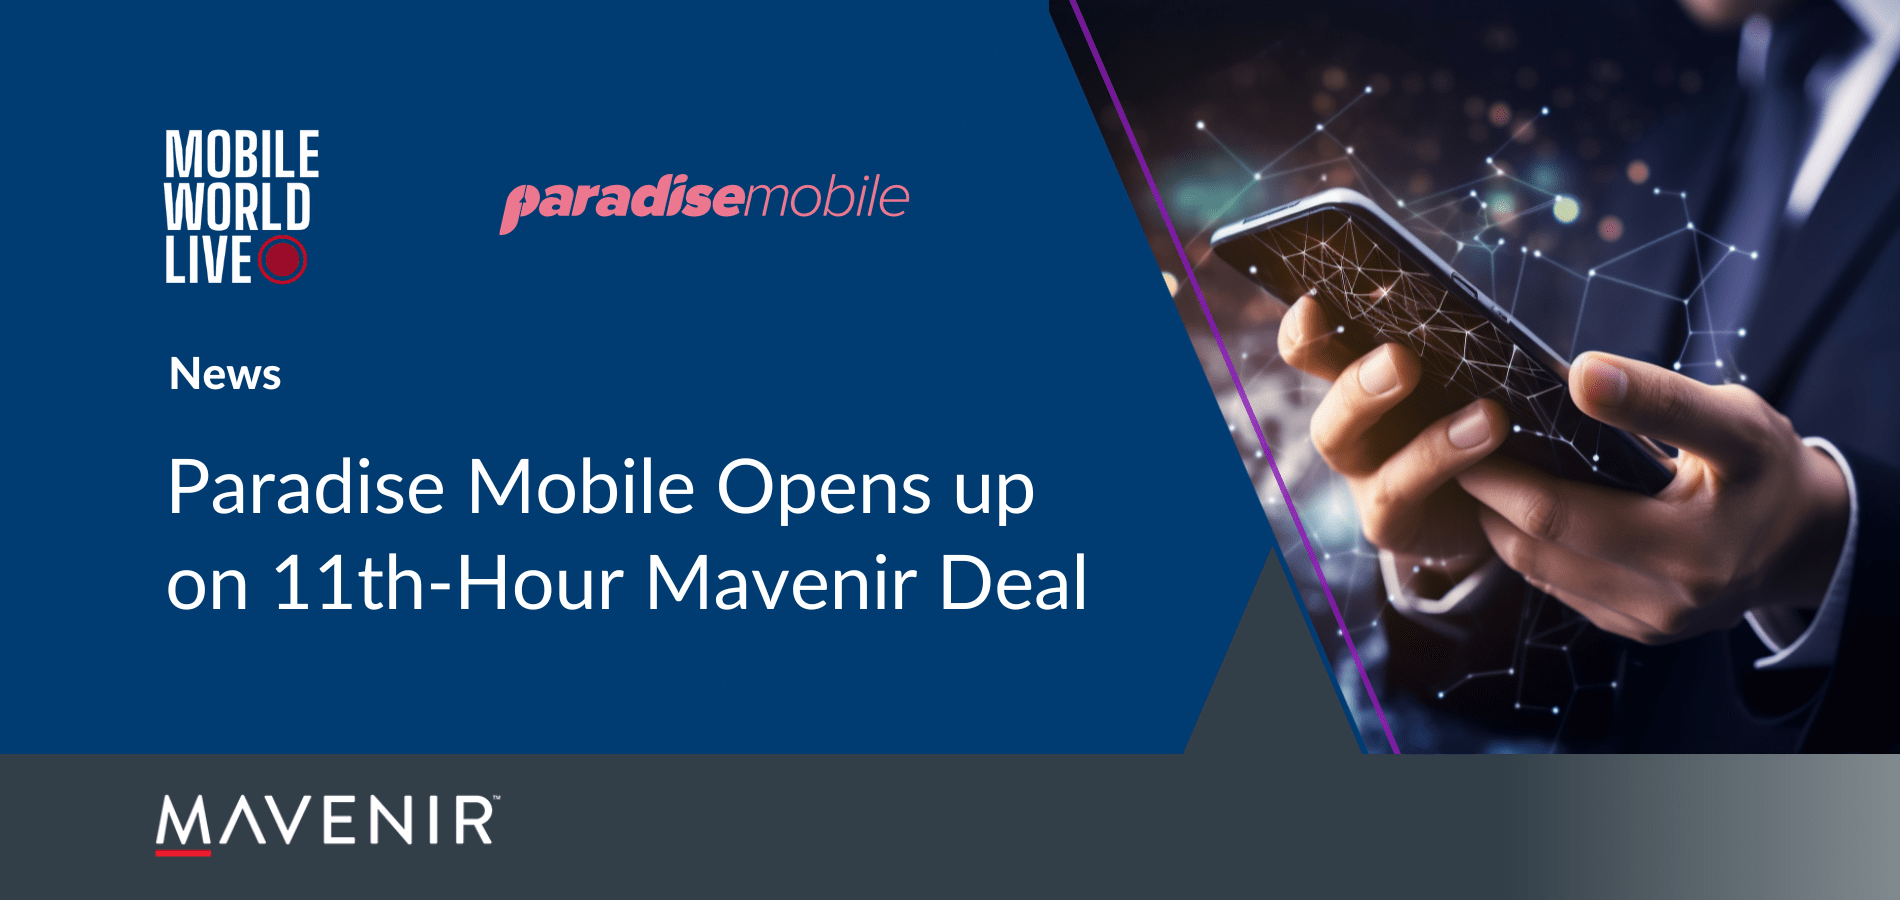 Paradise Mobile Opens up on 11th-Hour Mavenir Deal